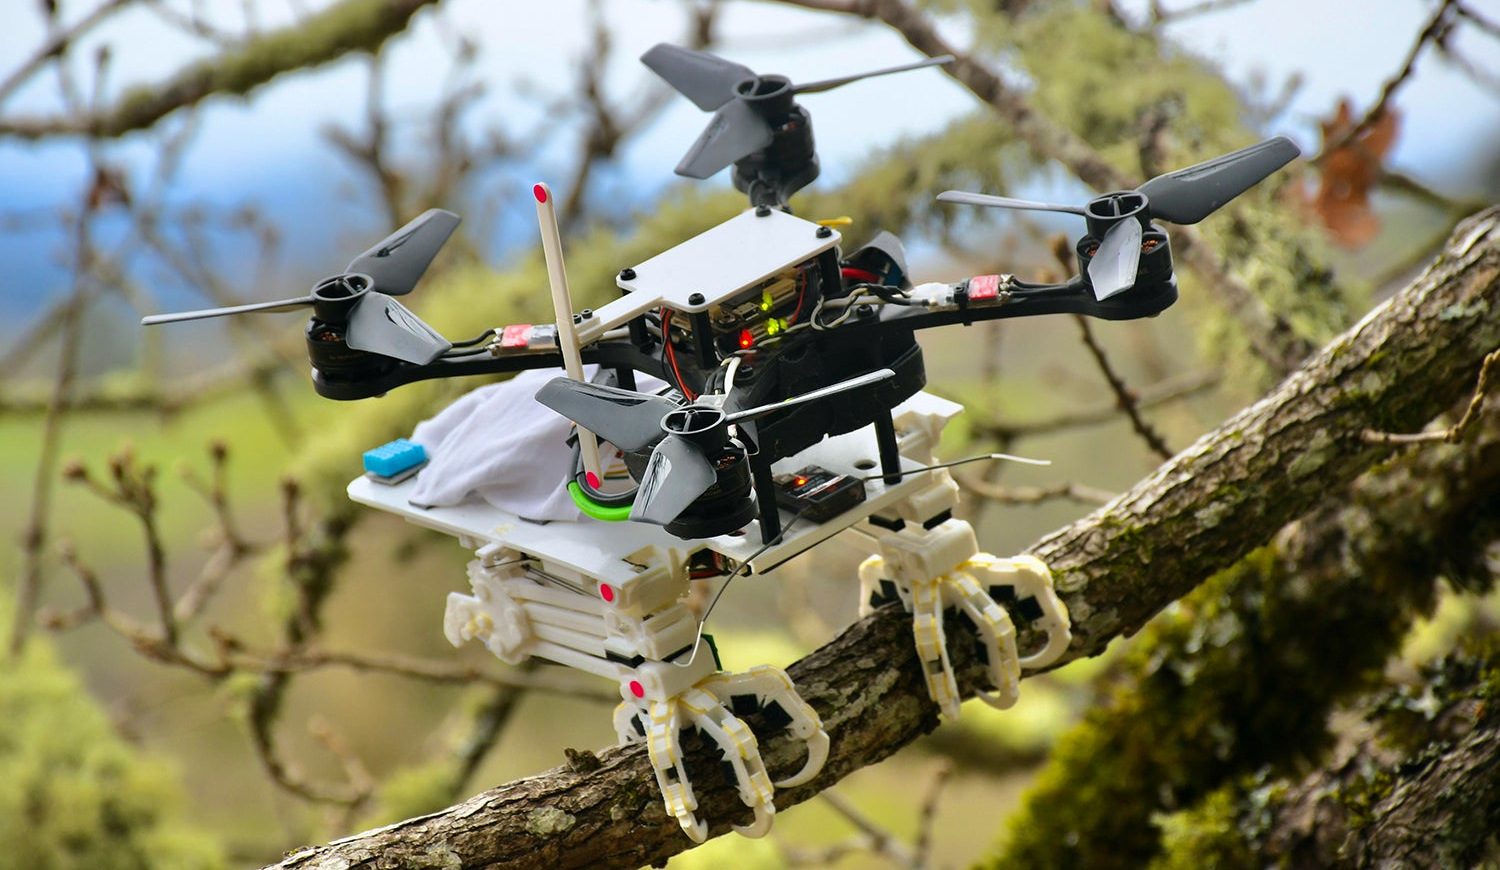 Grippy bird-inspired landing system for drones